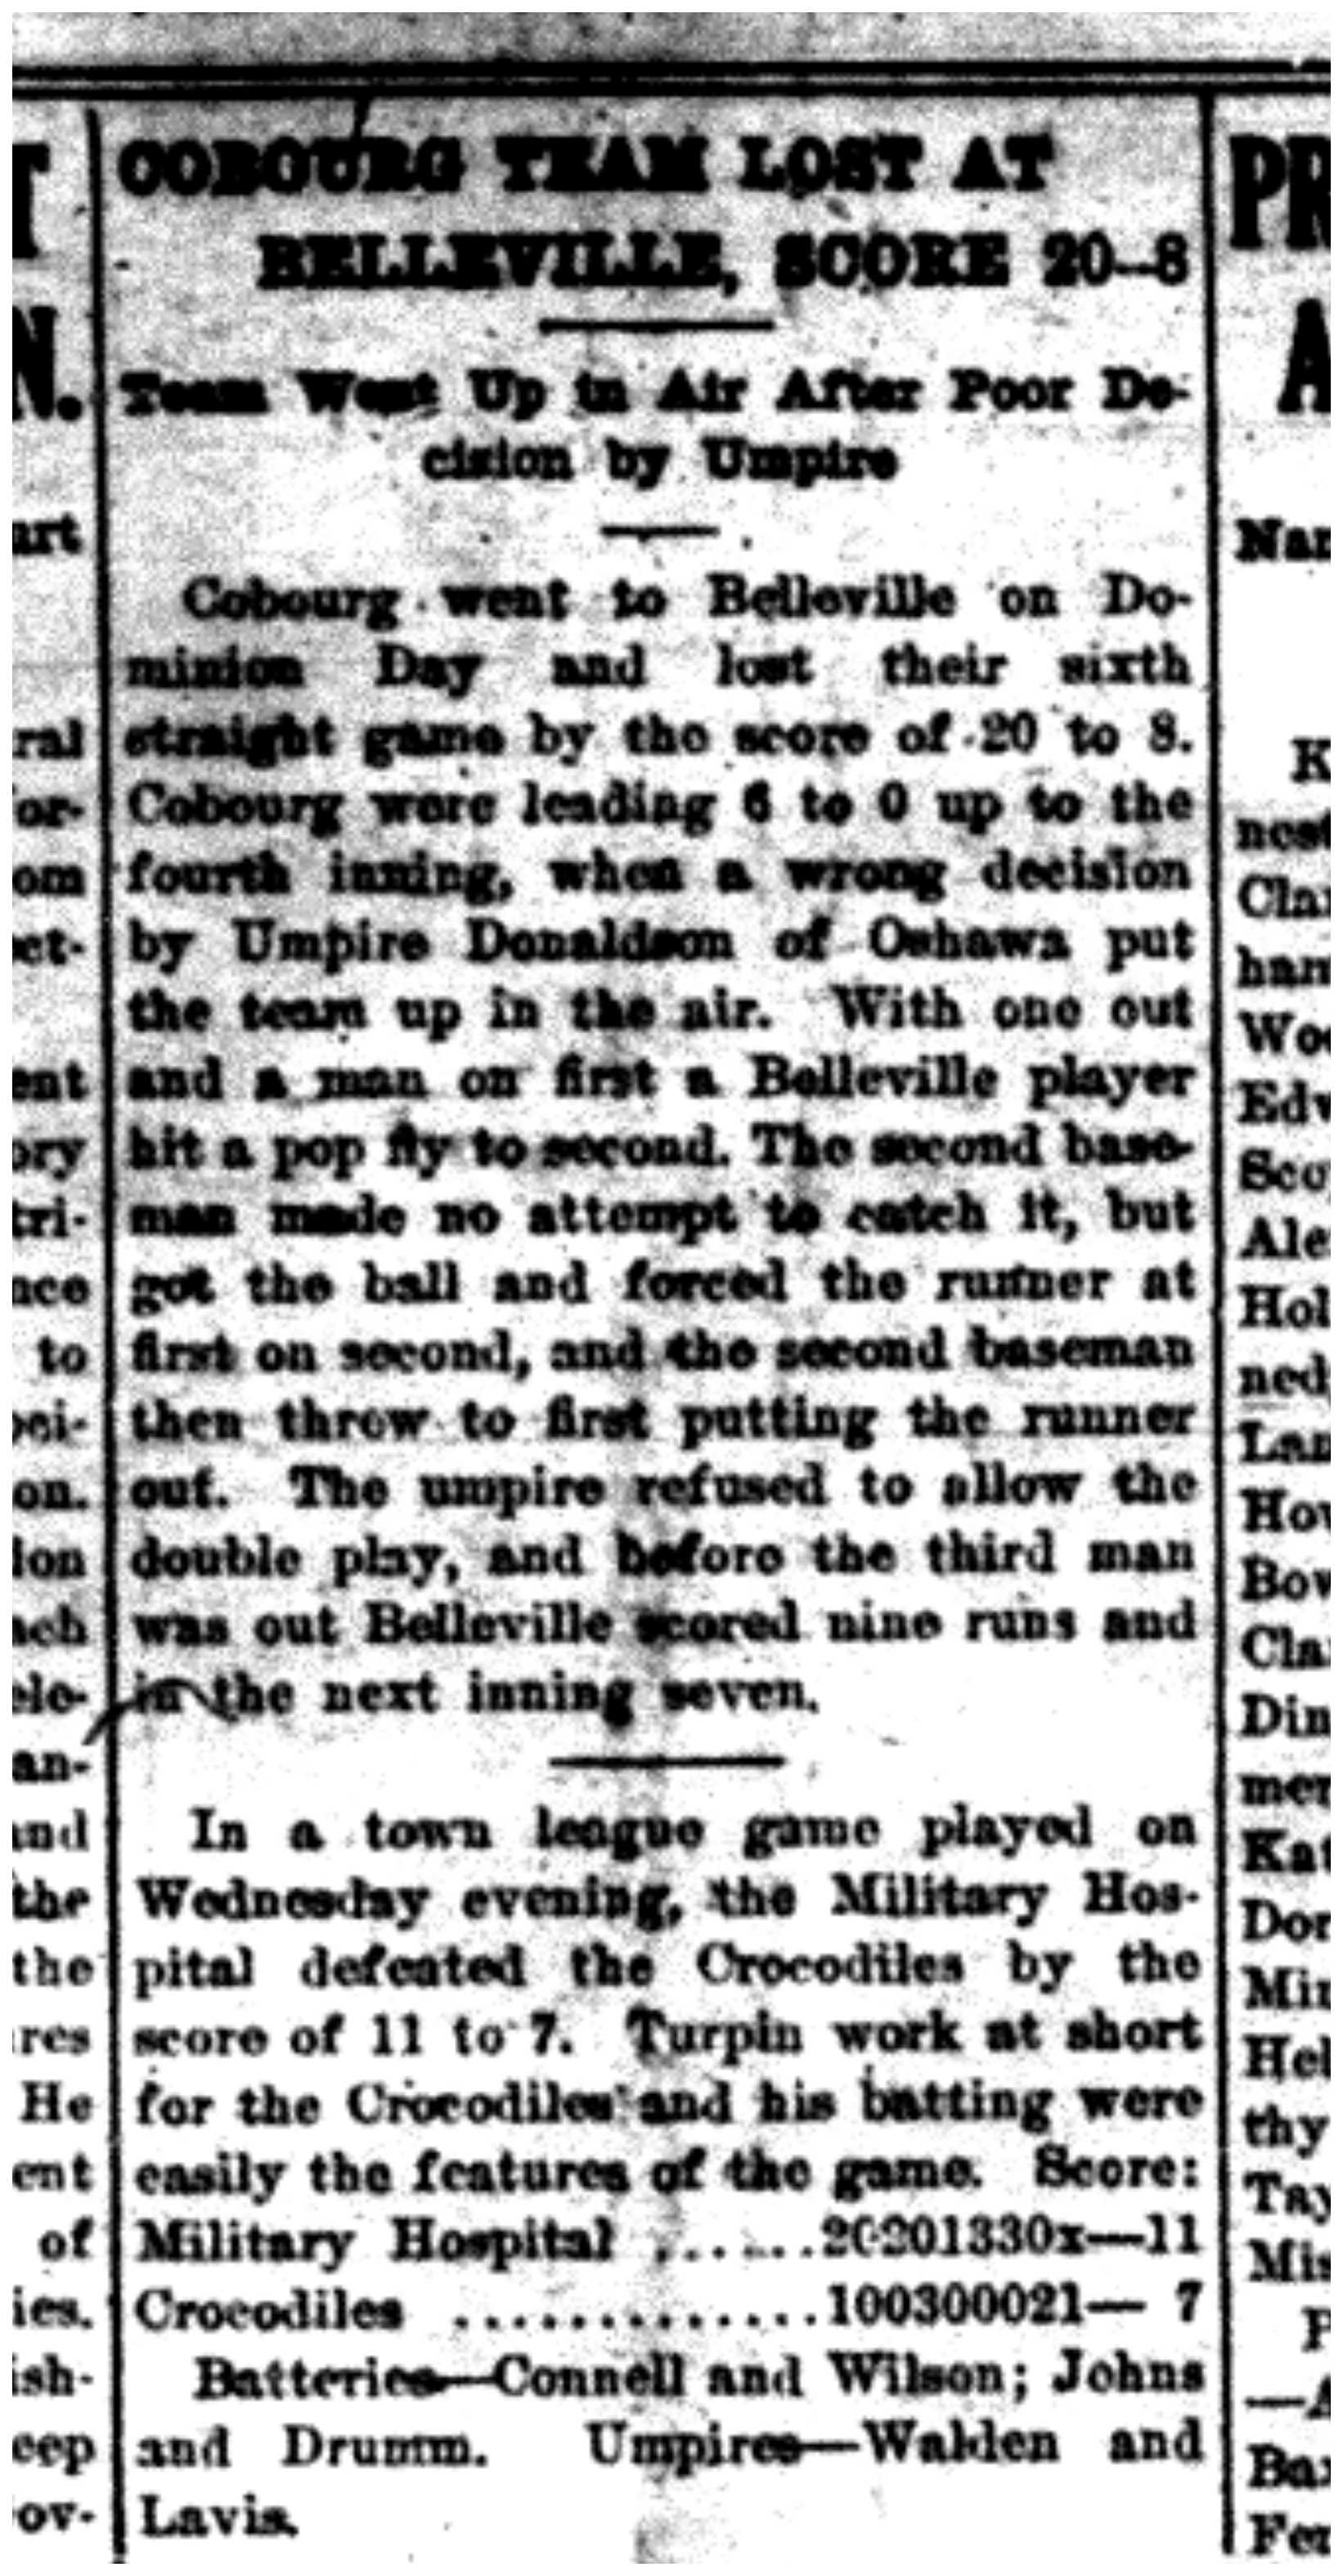 1919-07-04 Baseball -Cobourg loses 20-4